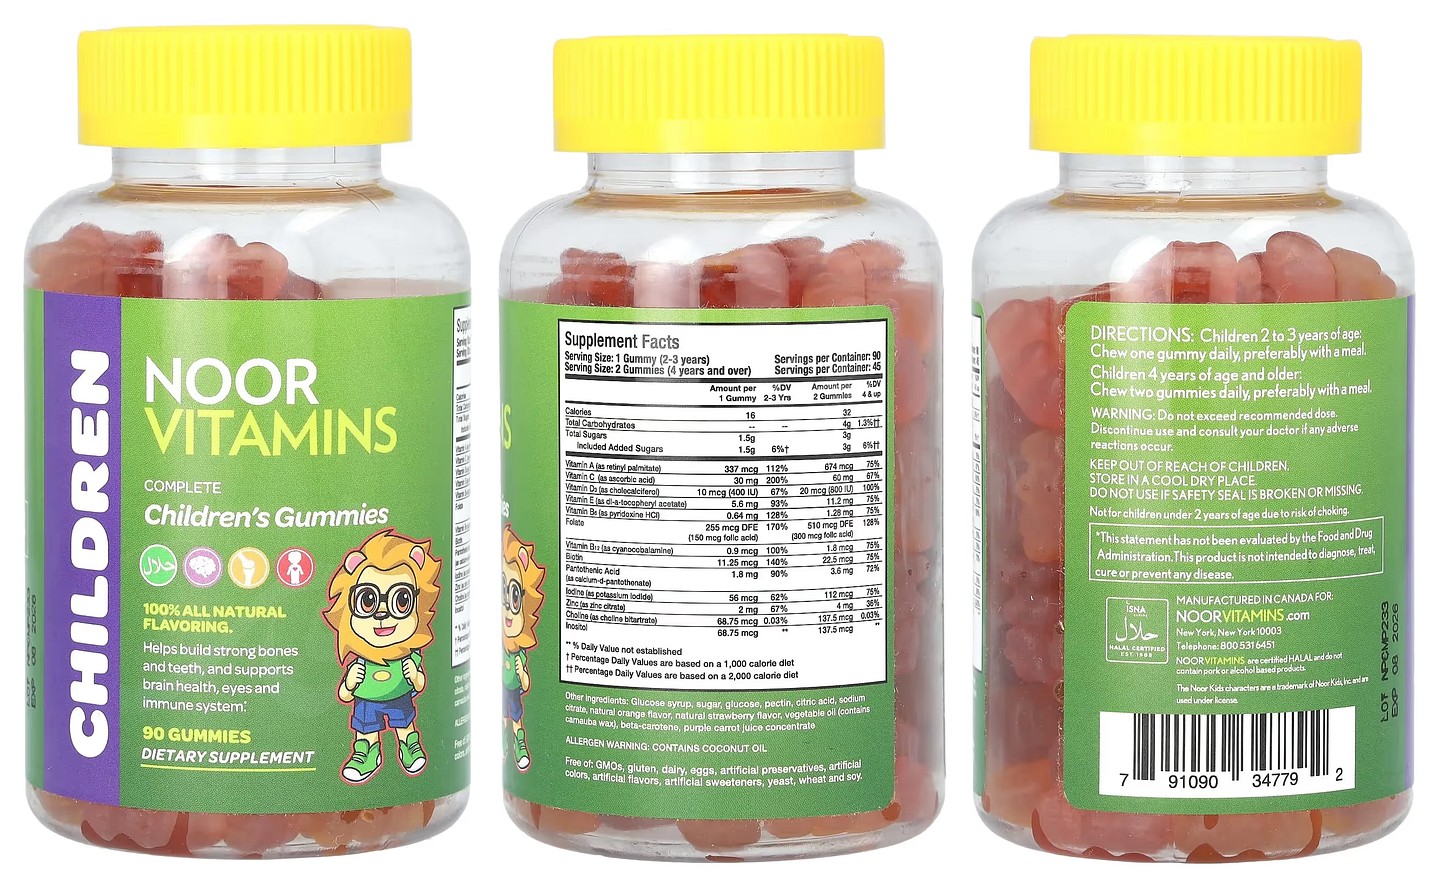 Noor Vitamins, Children's Gummies packaging